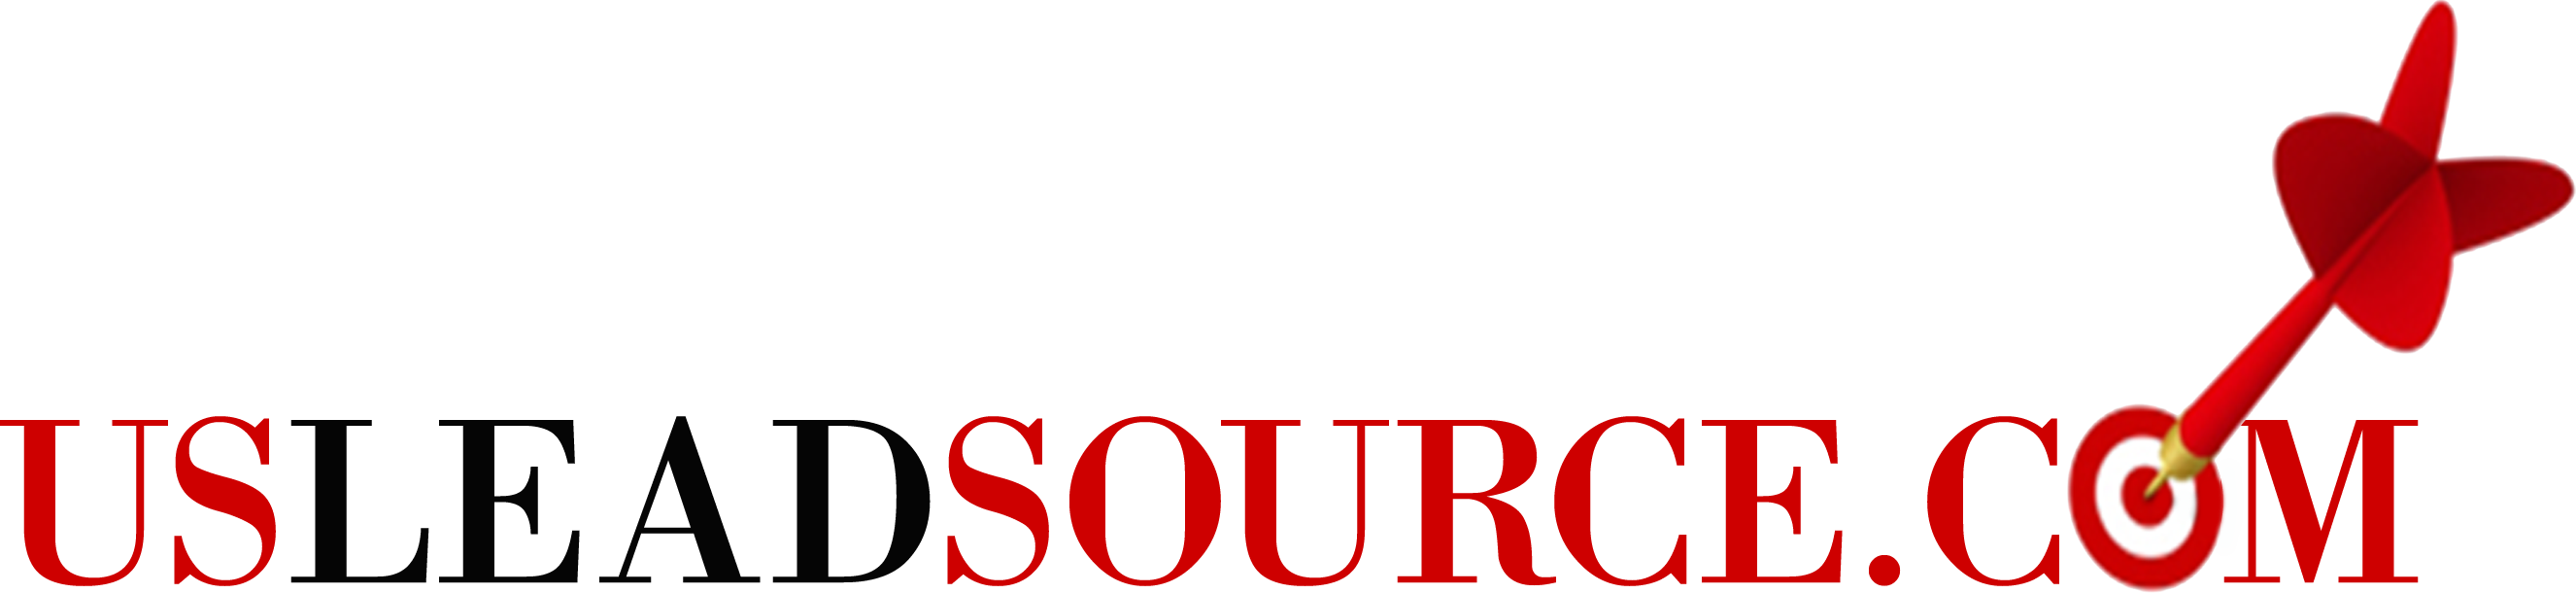 USLeadSource's Logo